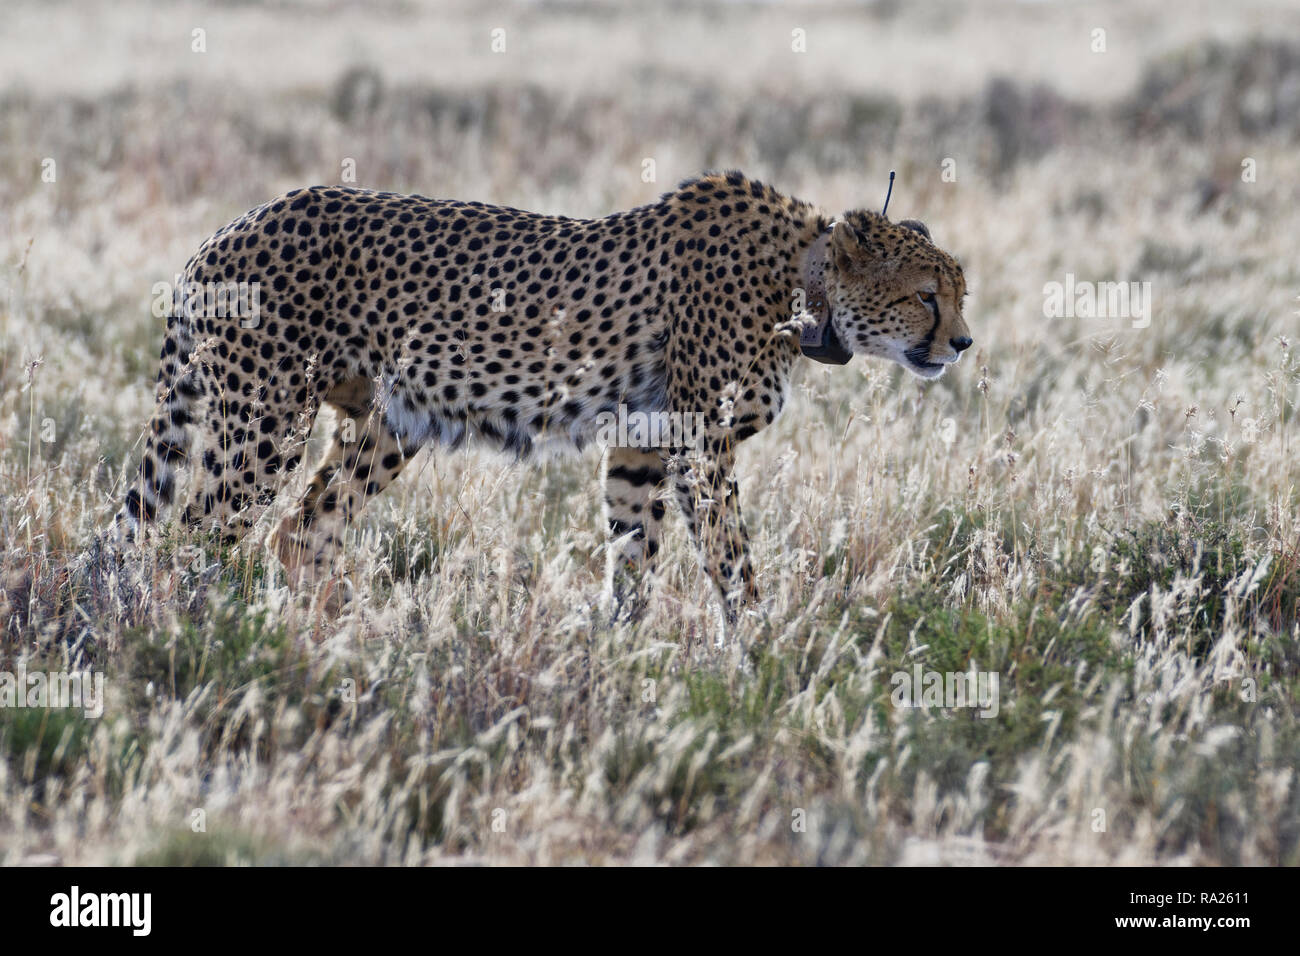 Cheetah (Acinonyx jubatus), adult male wearing a transmitter collar, walking in open grassland, Mountain Zebra National Park, Eastern cape, South Afri Stock Photo